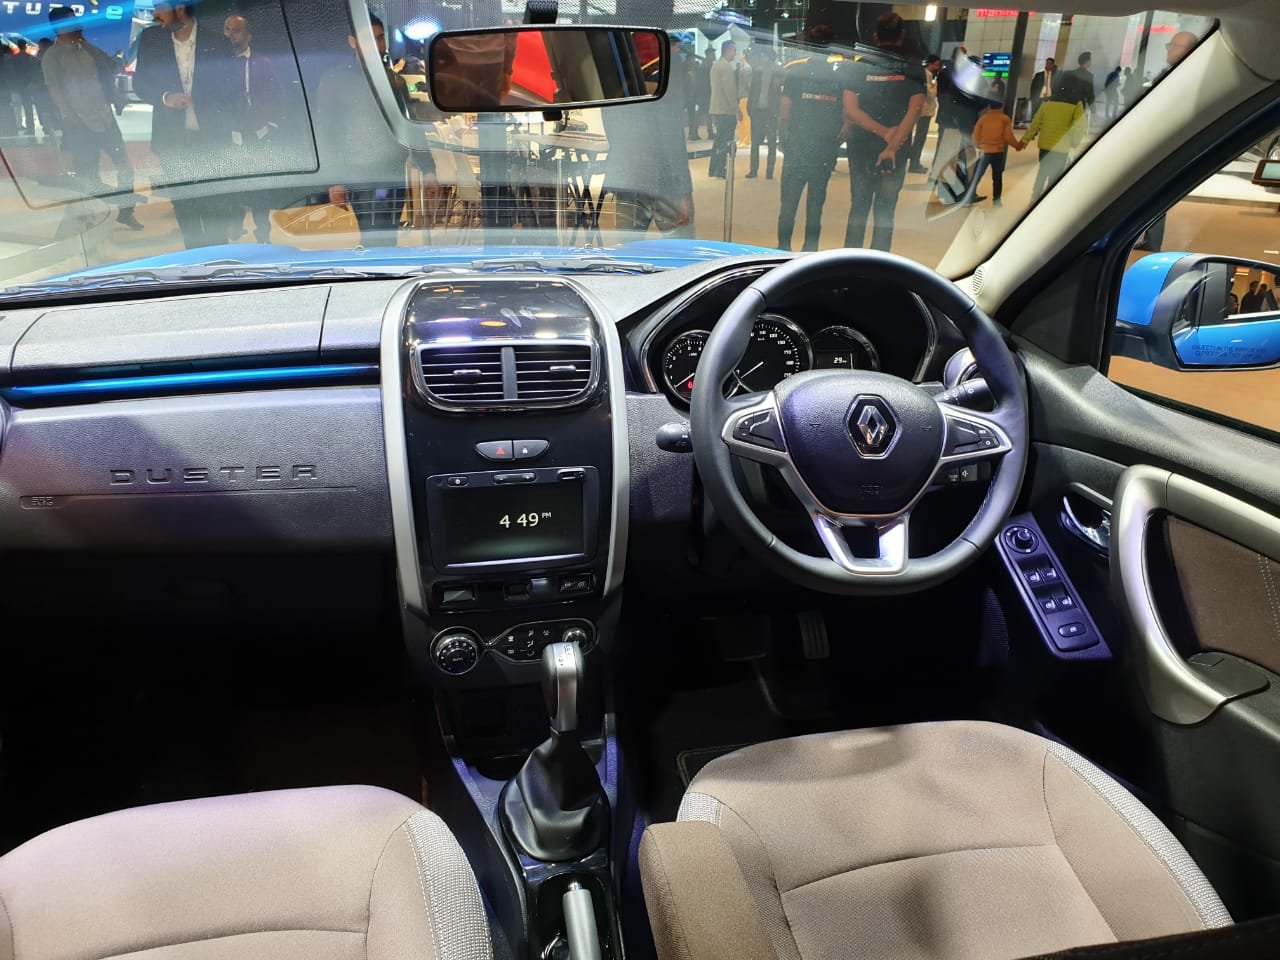 Auto Expo 2020 - Renault Duster interior